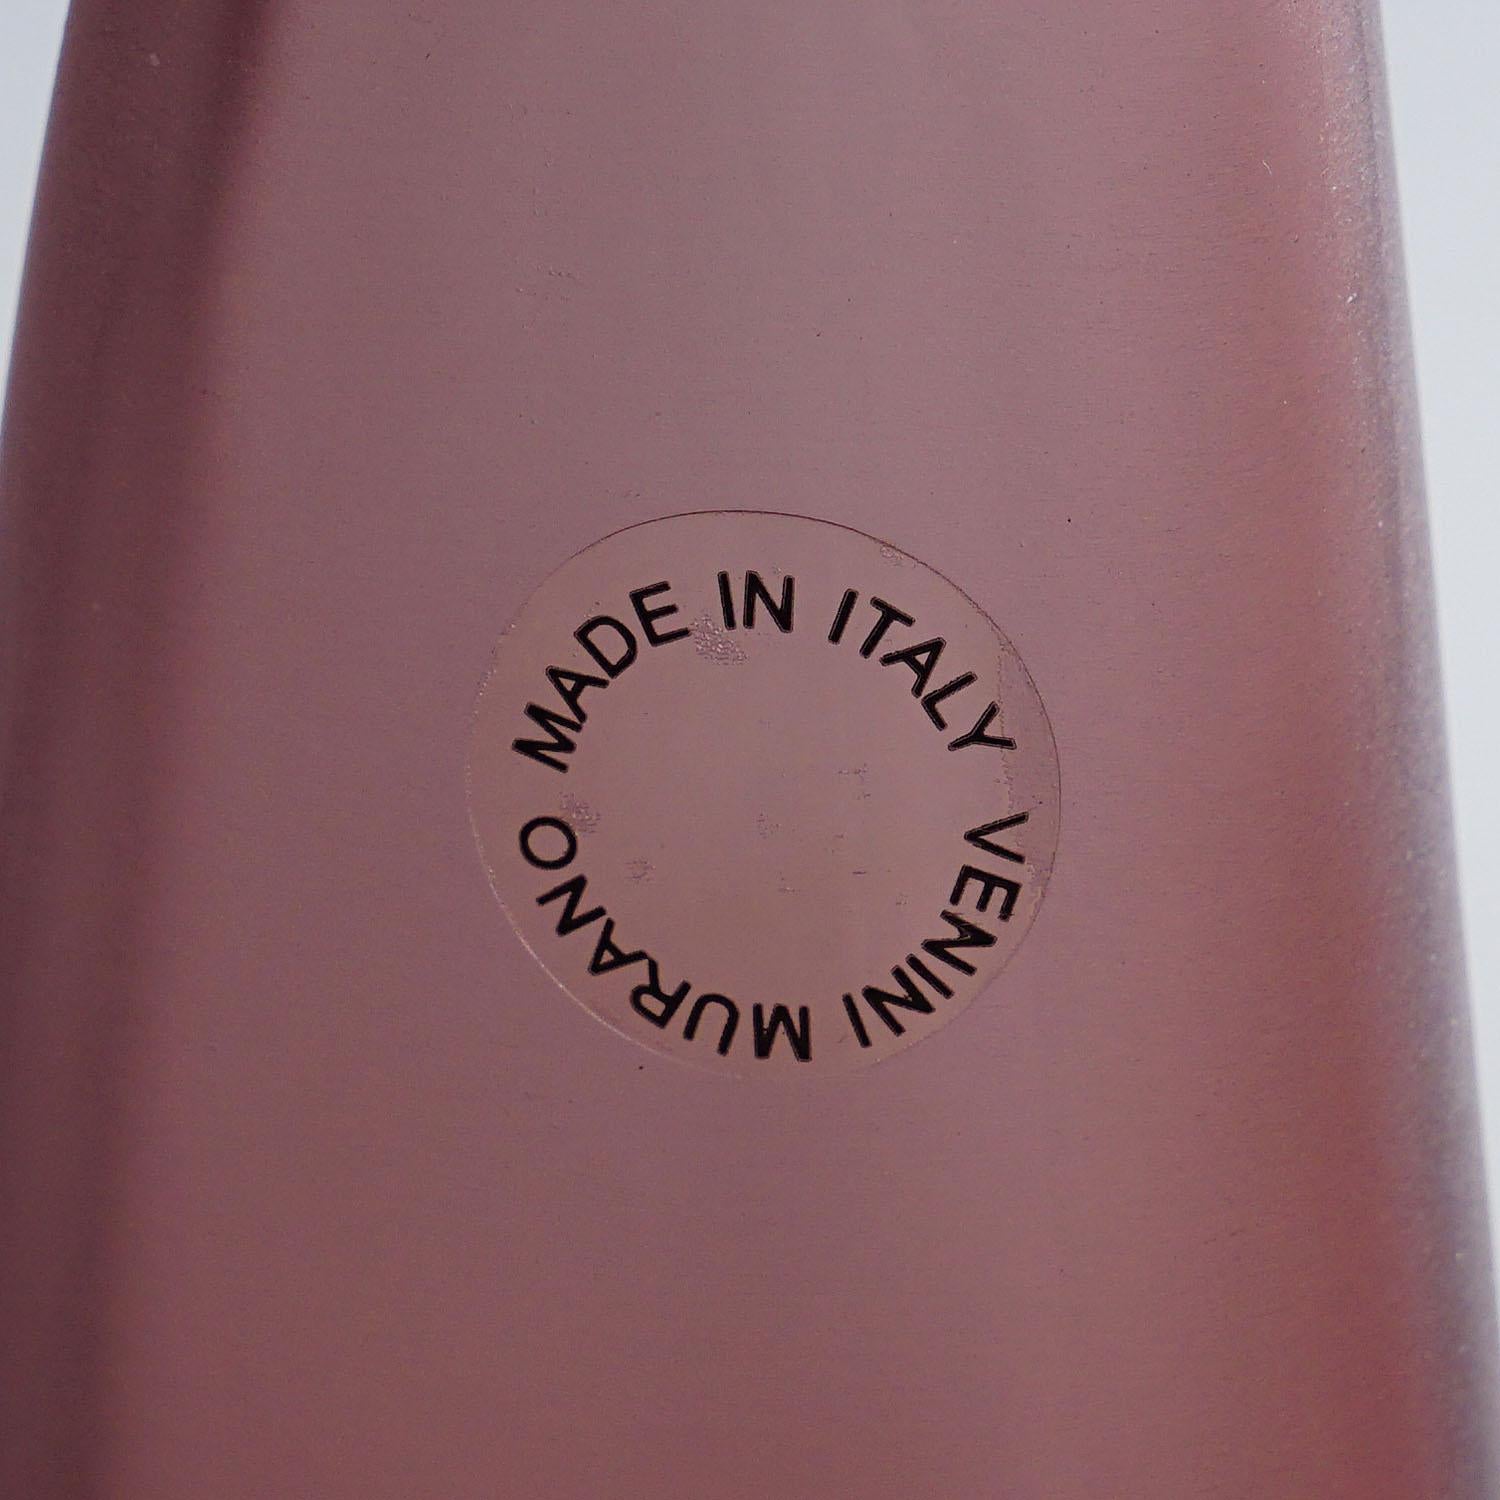 20th Century Paolo Venini Inciso Glass Bottle Manufactured by Venini 1990s For Sale